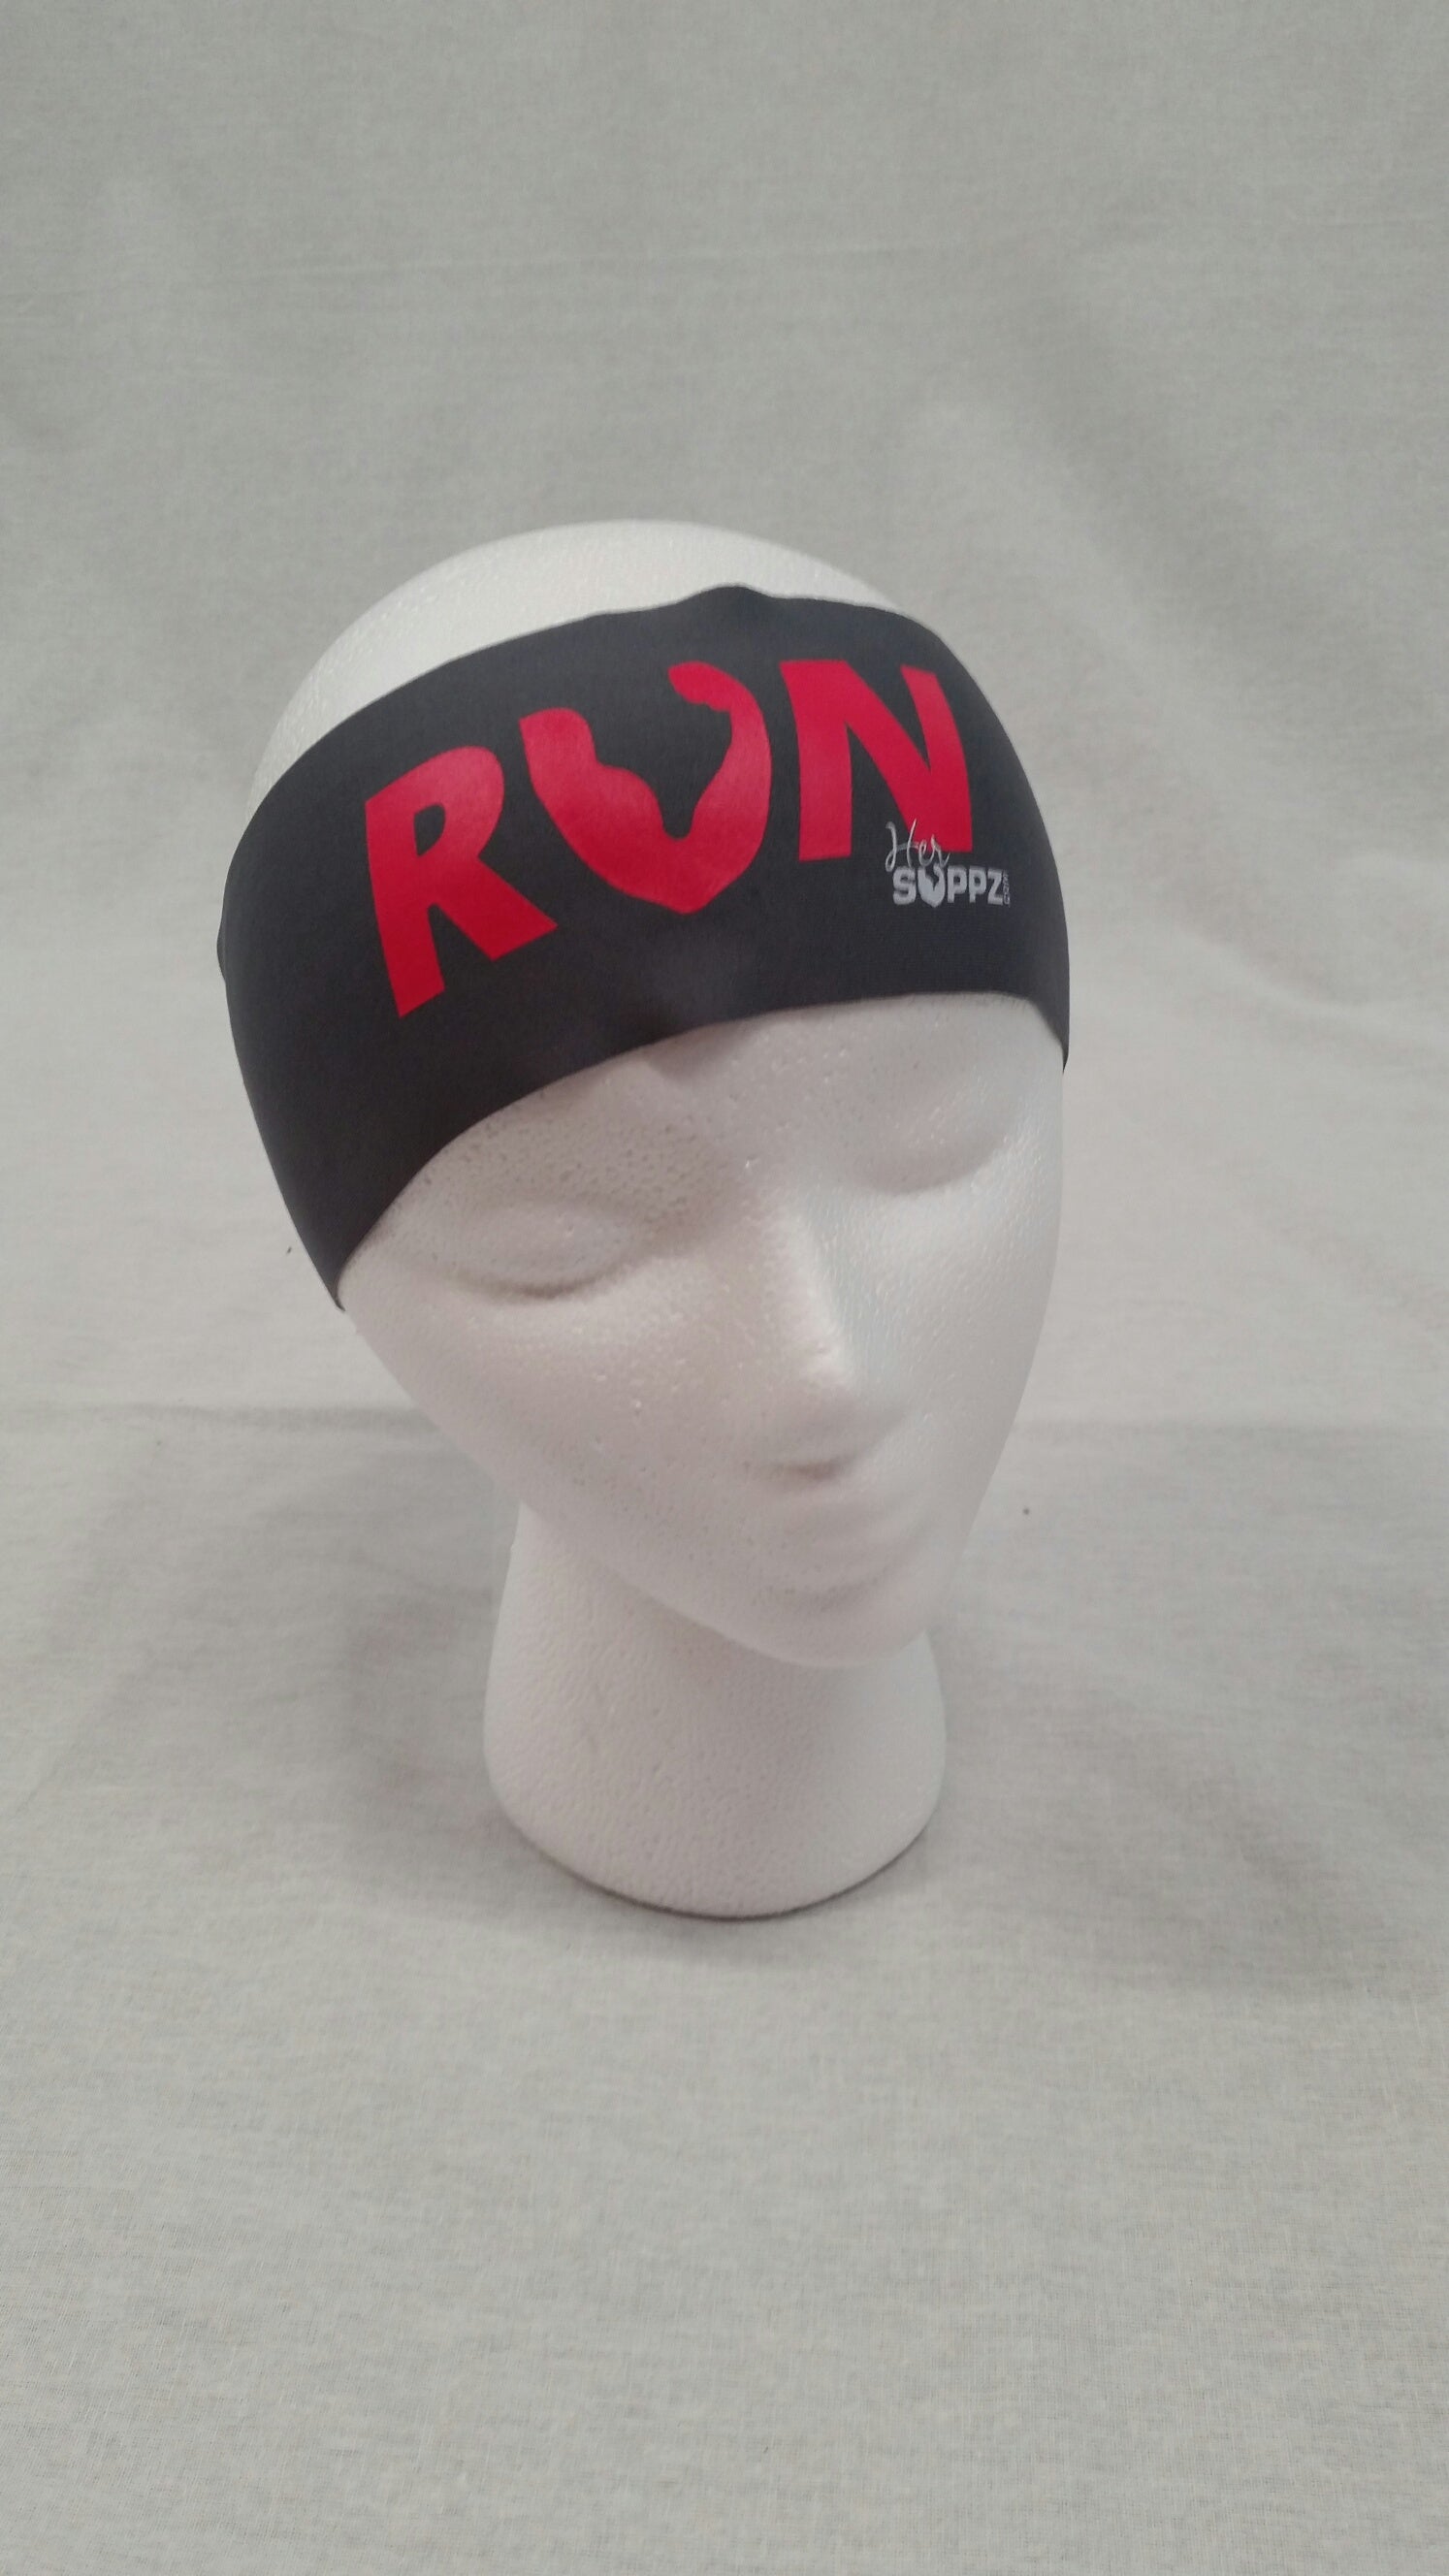 Run Headband by Her Suppz